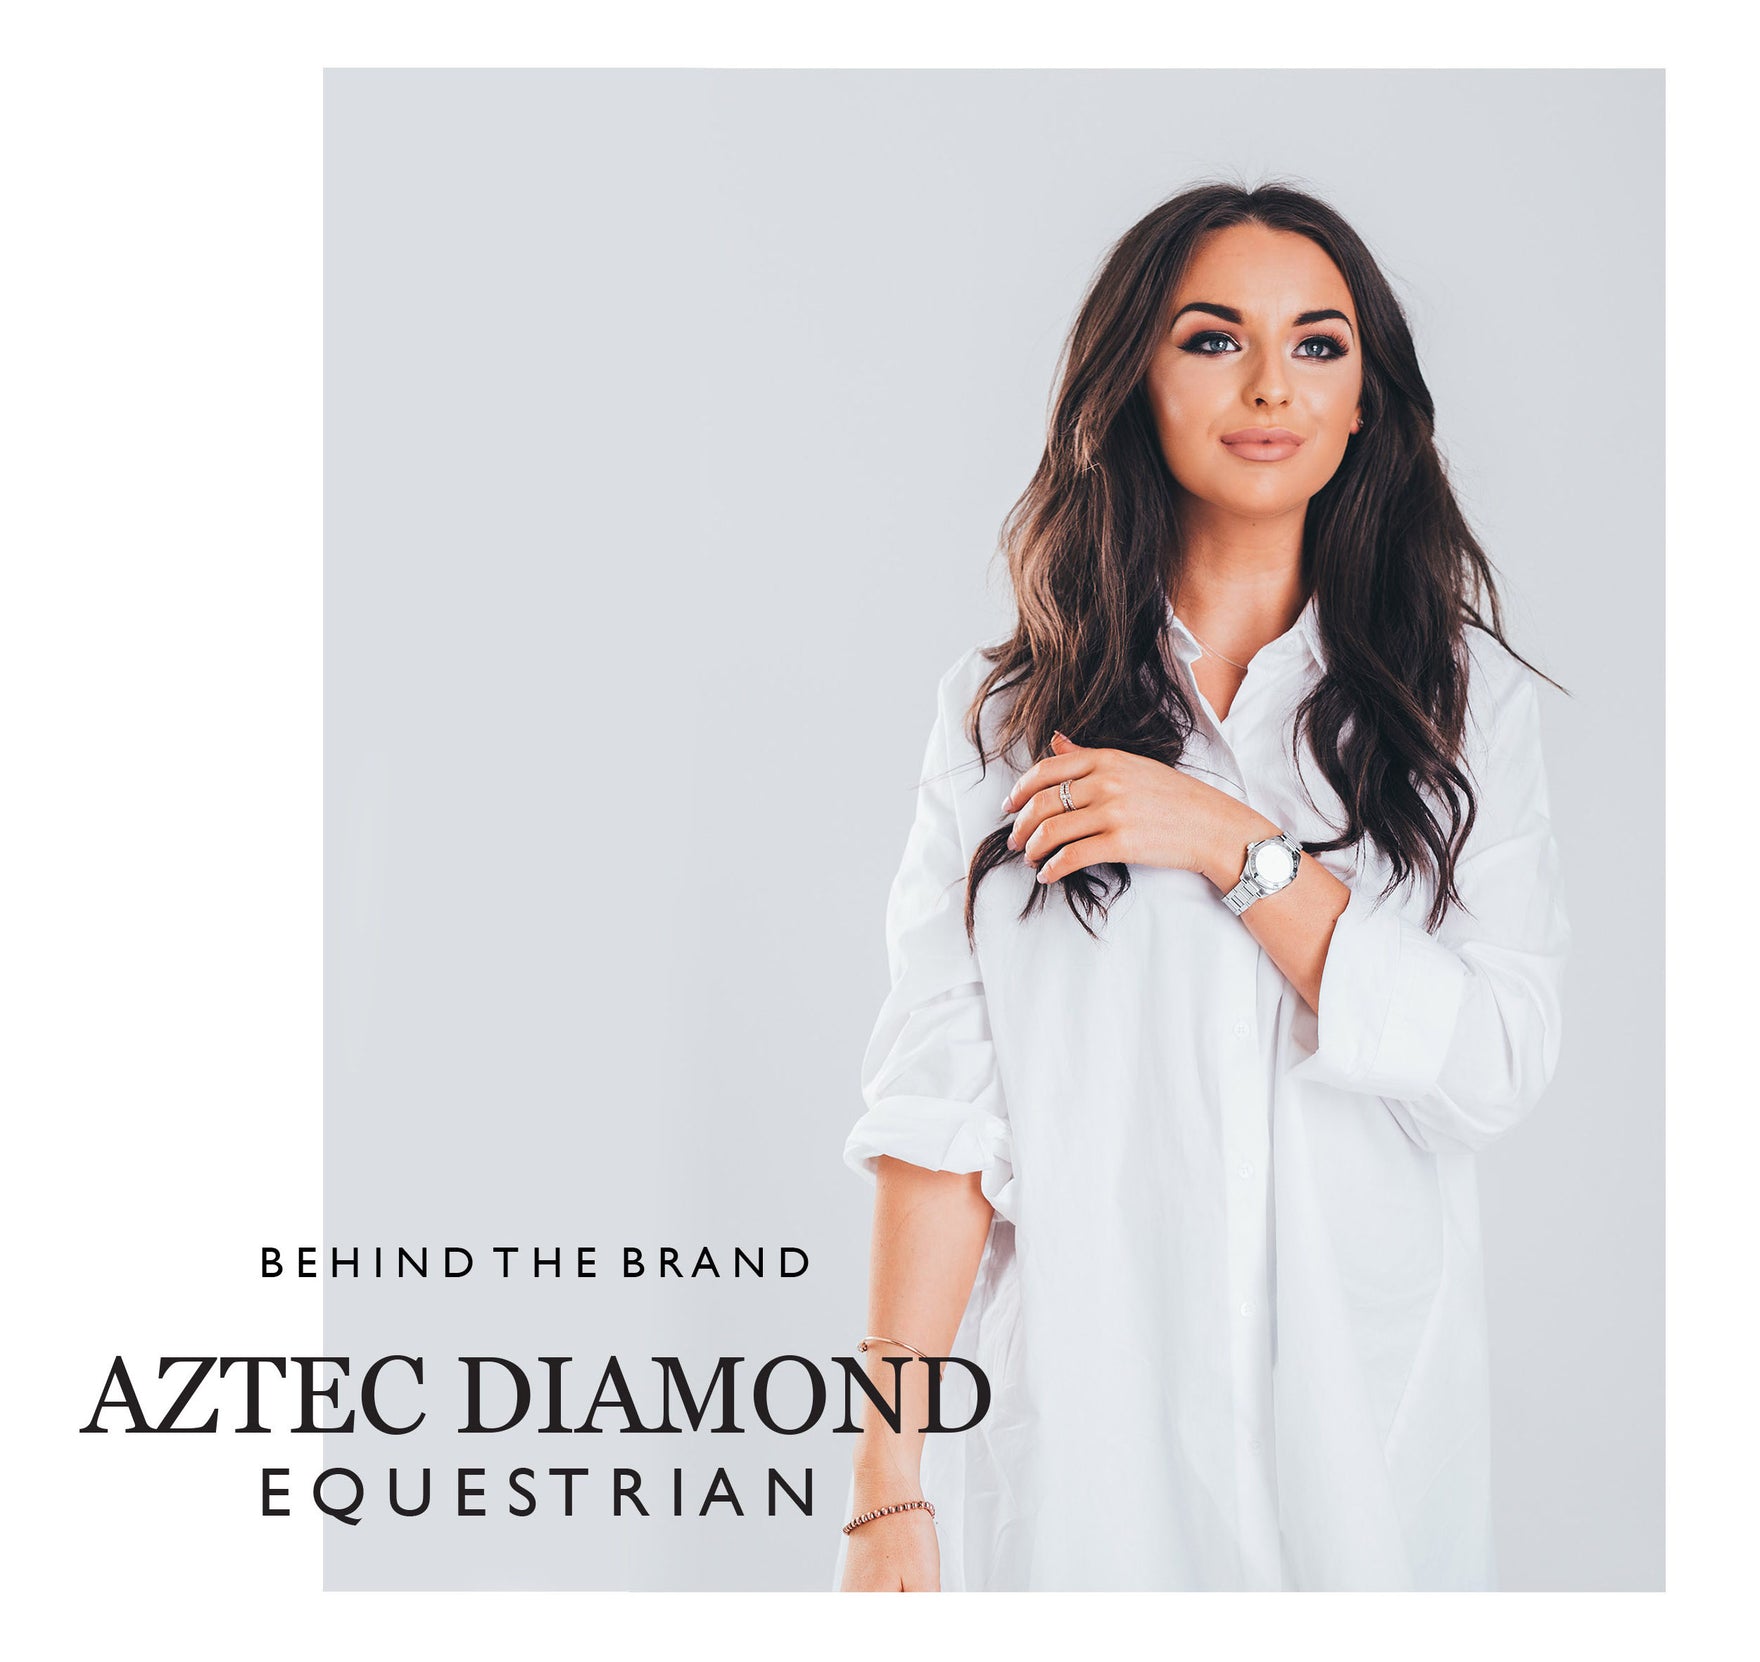 Aztec Diamond Equestrian - Behind the Brand